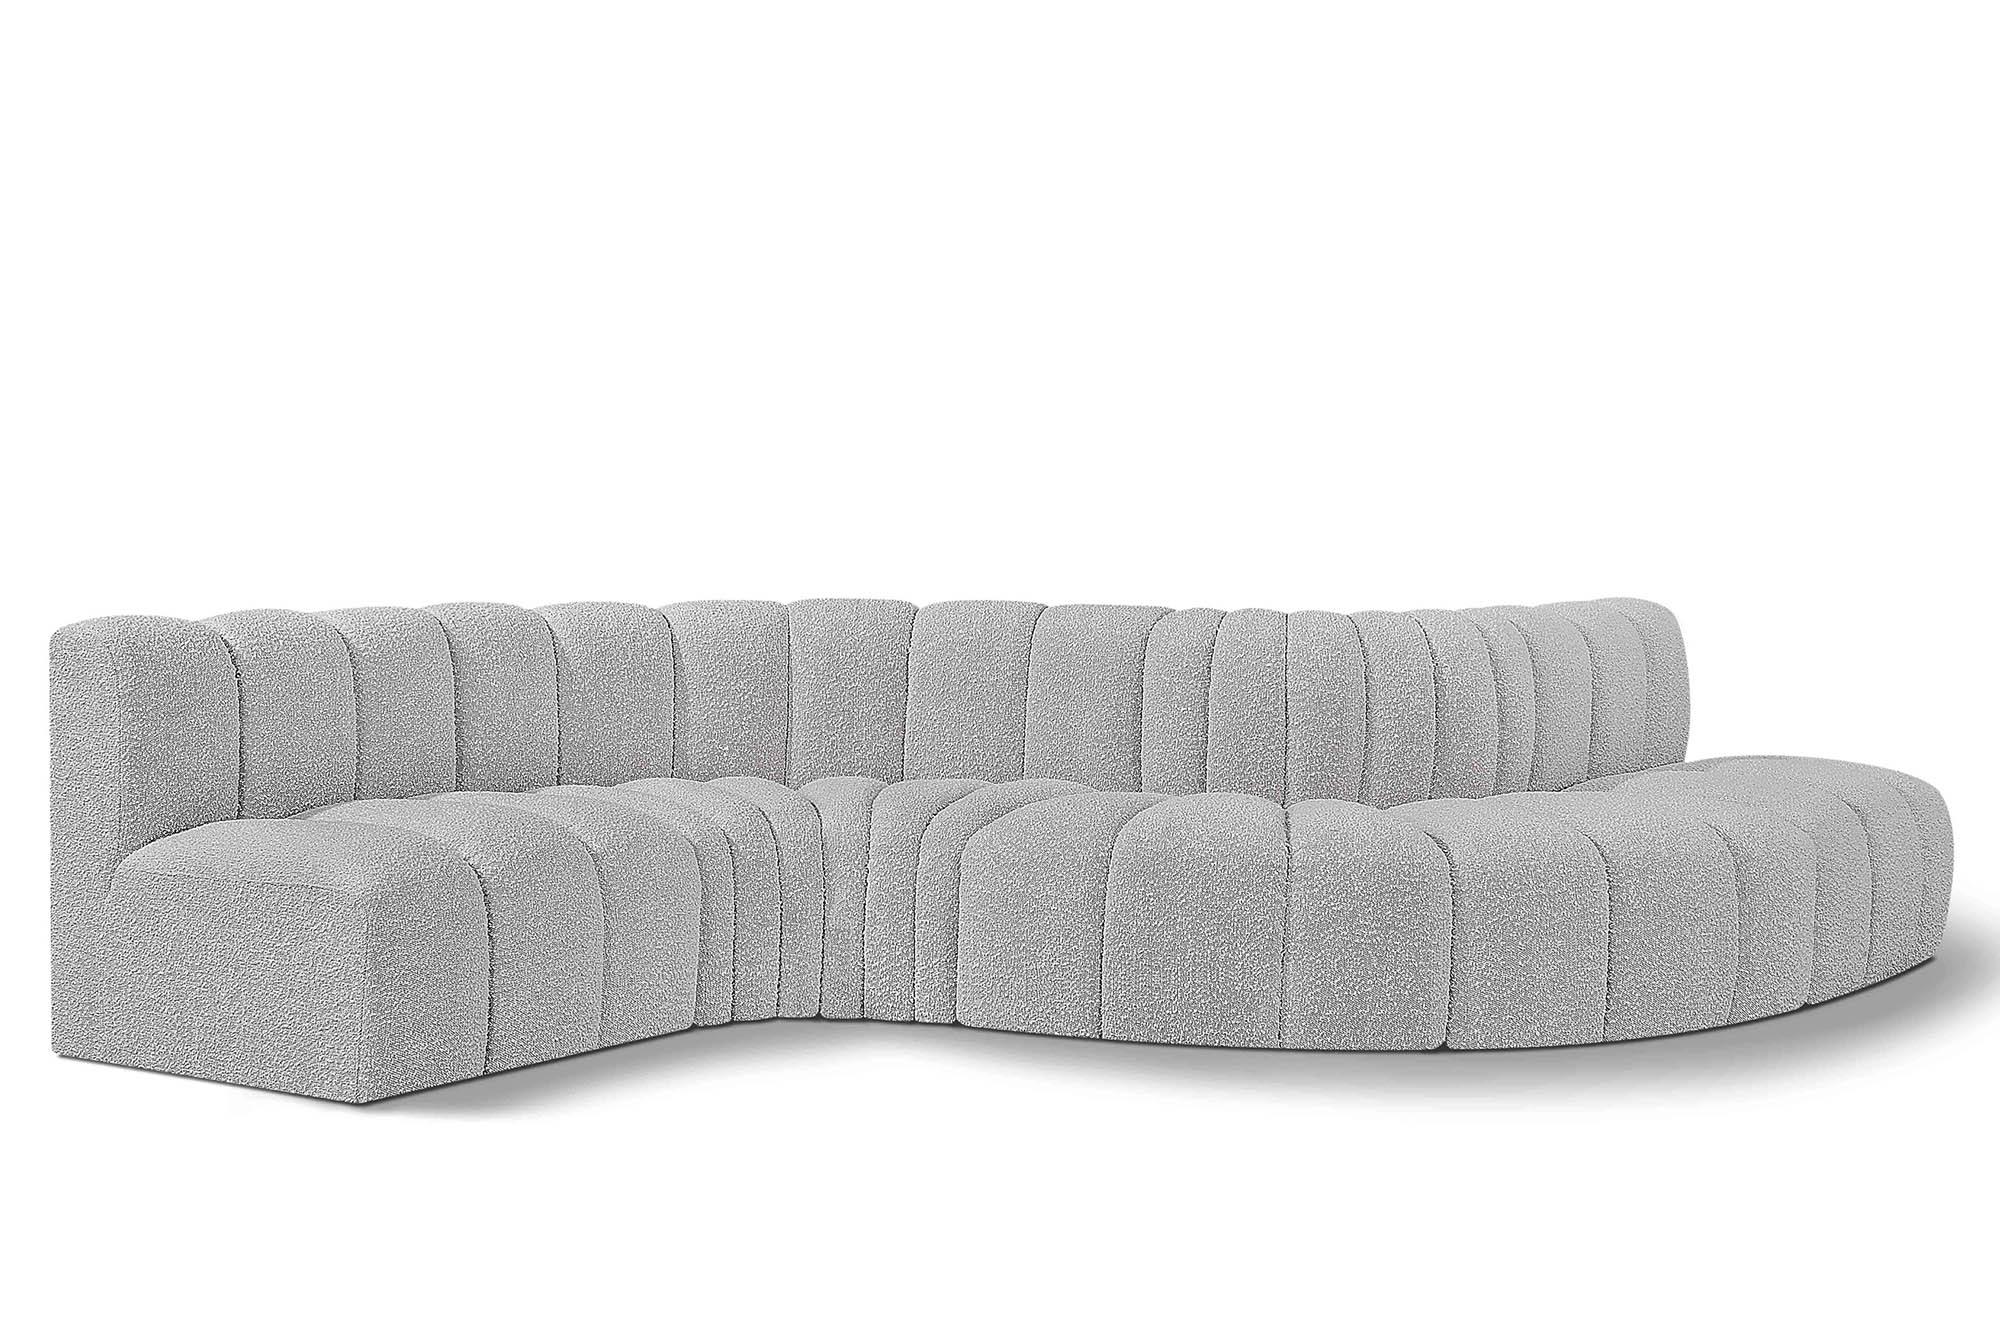 Contemporary, Modern Modular Sectional Sofa ARC 102Grey-S6A 102Grey-S6A in Gray 